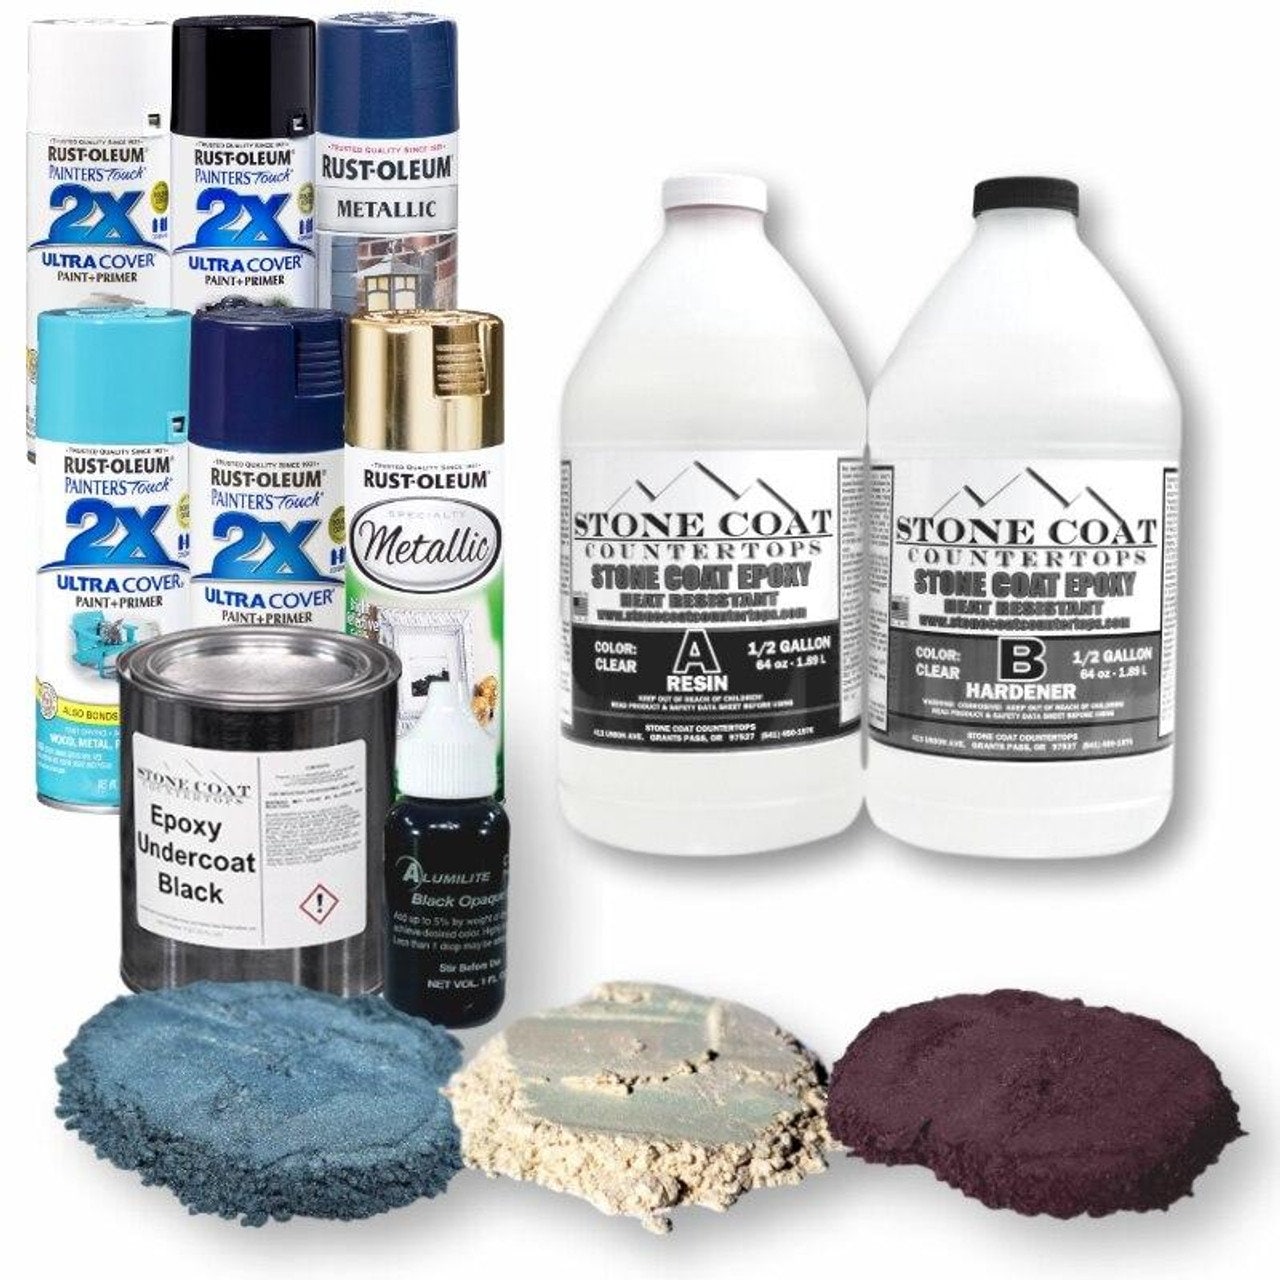 Metallic Pigment Powder | Stone Coat Countertops